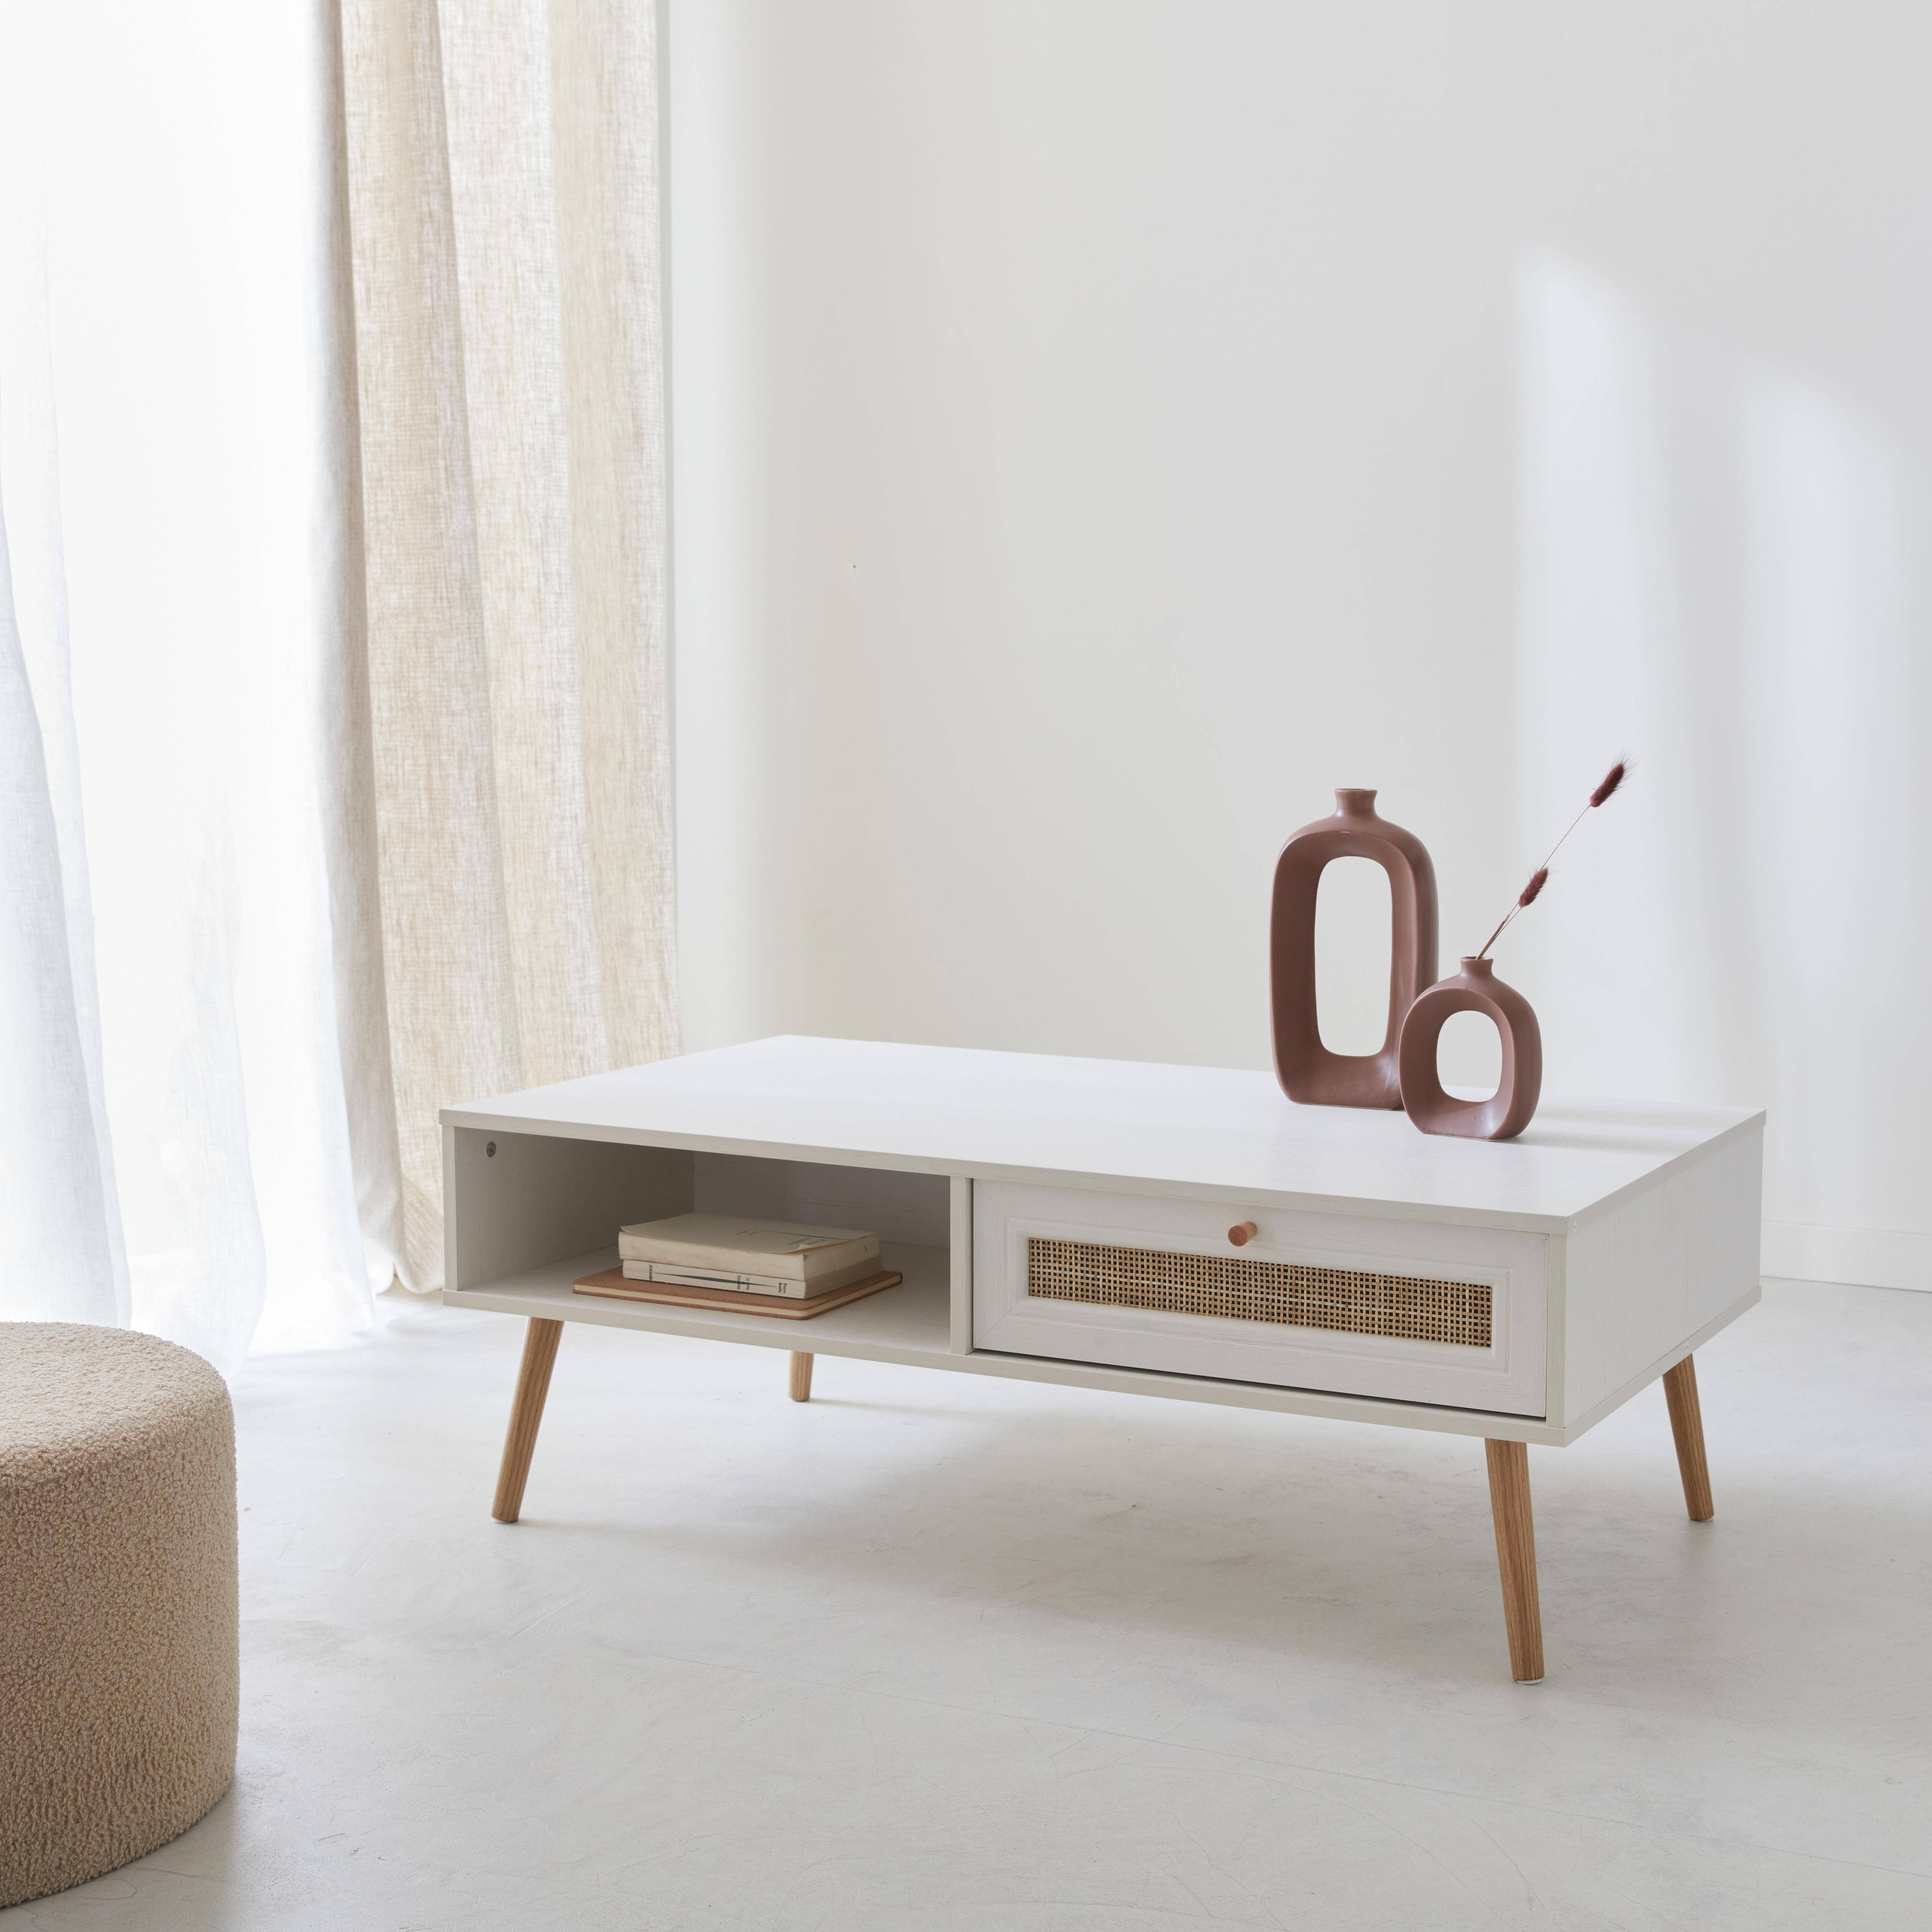  Wood and woven rattan coffee table with storage, 110x59x39cm, white, Boheme,sweeek,Photo2